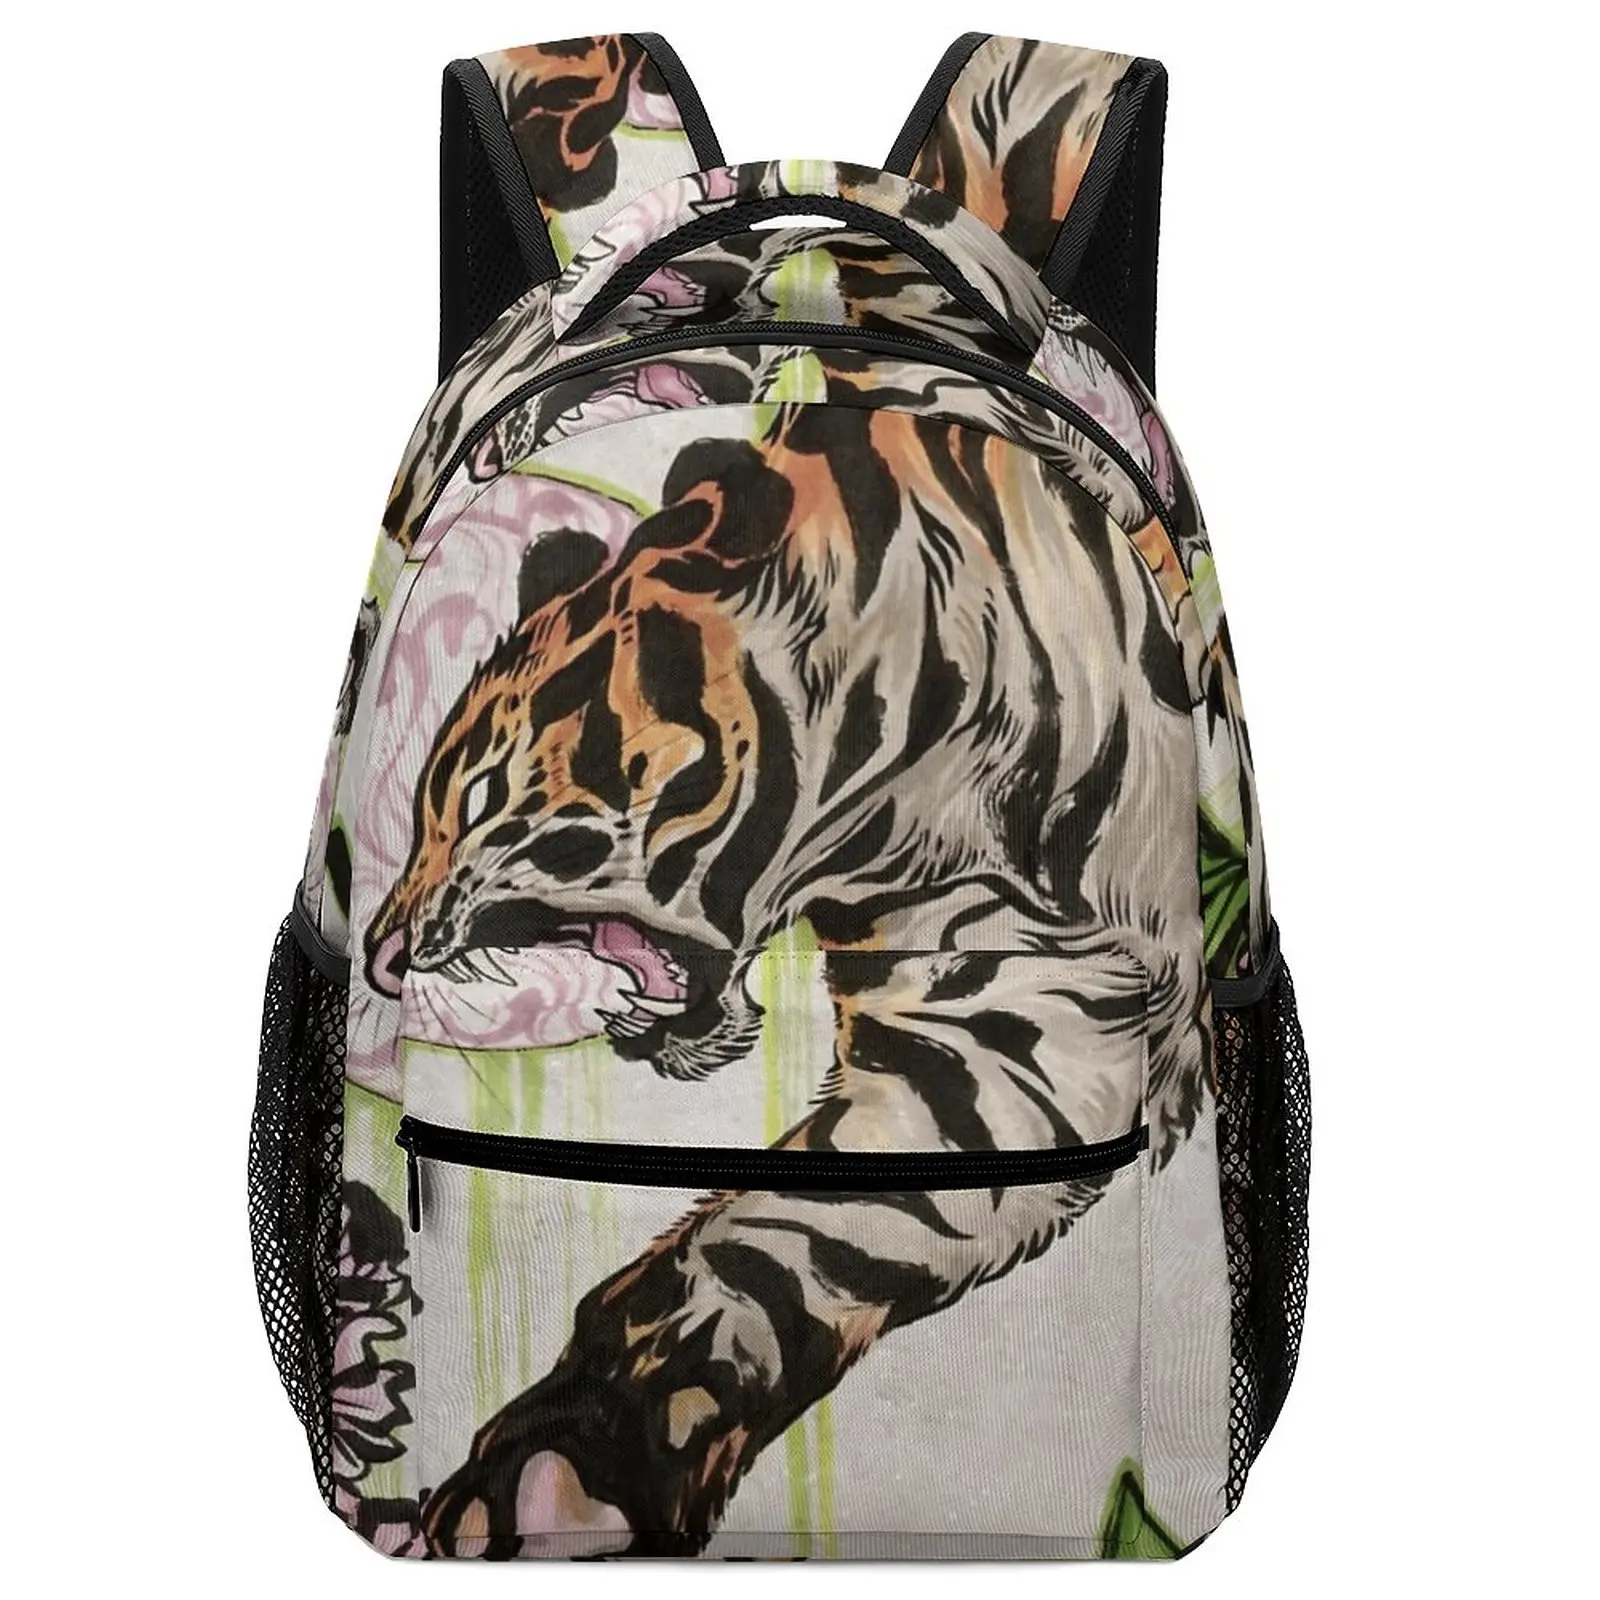 New Art Tiger Handbags for Student Kids Teen School Bag Cute Bags For Women